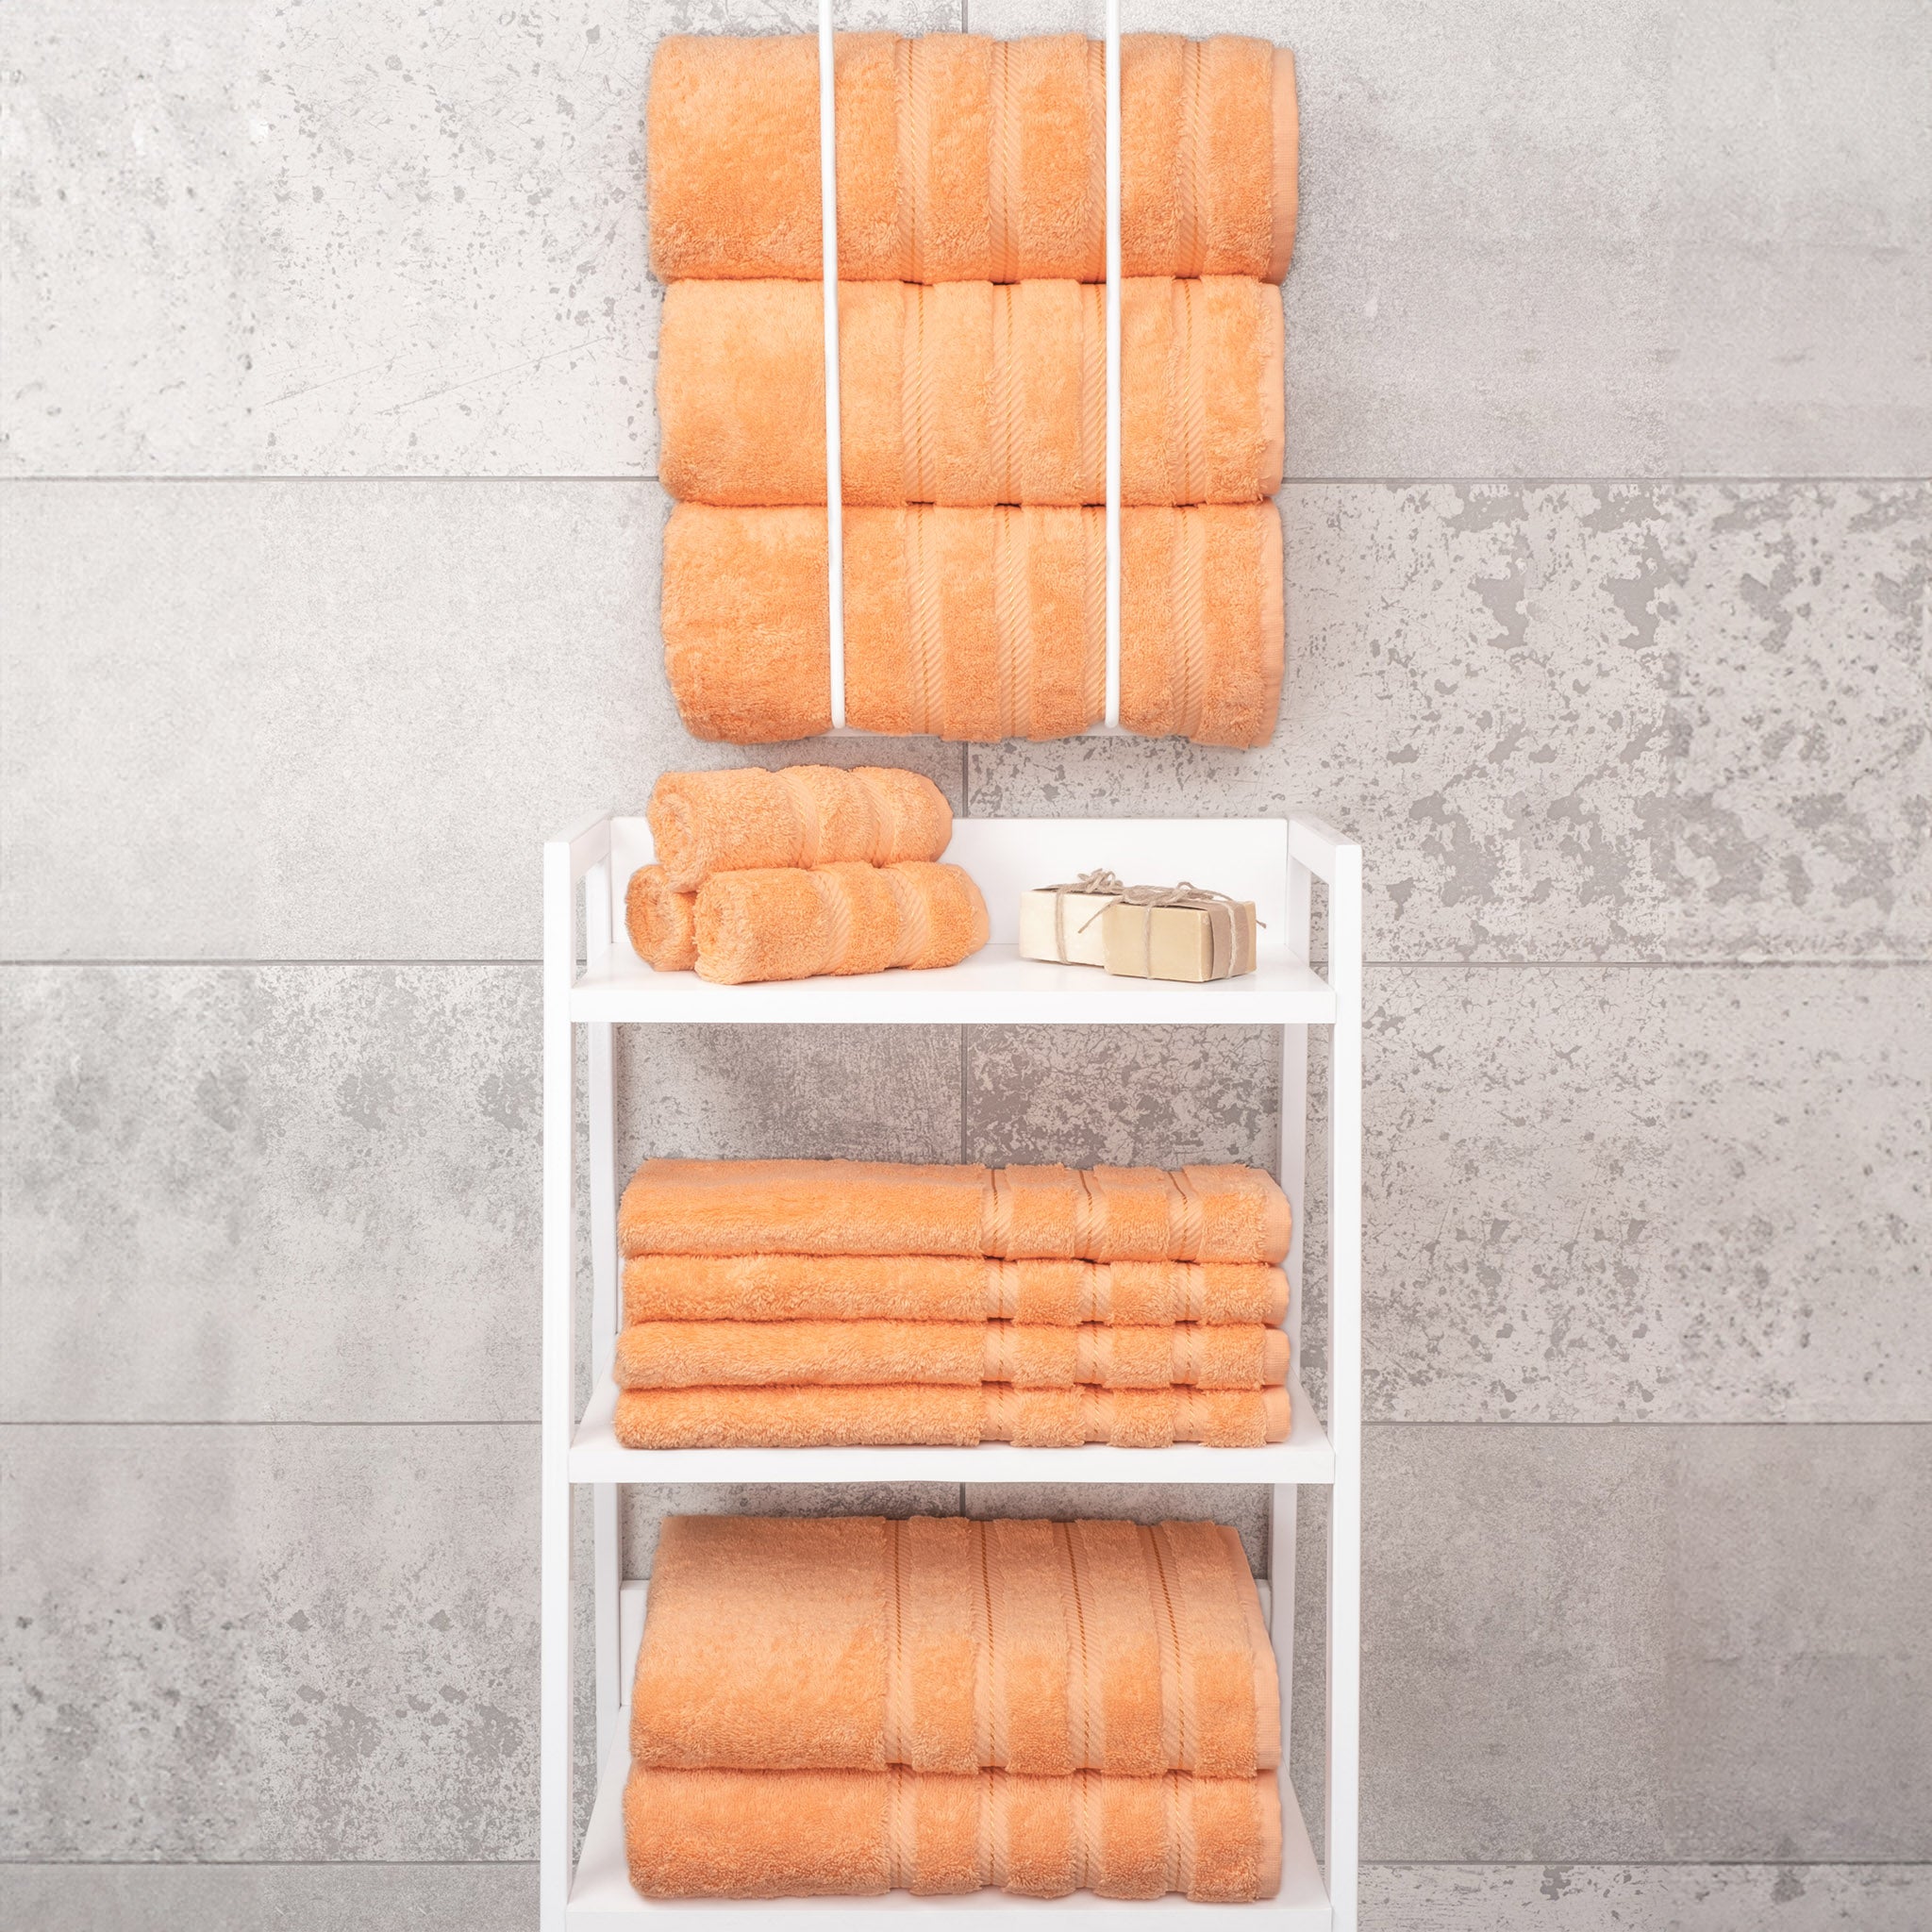 American Soft Linen 100% Turkish Cotton 4 Pack Bath Towel Set malibu-peach-7